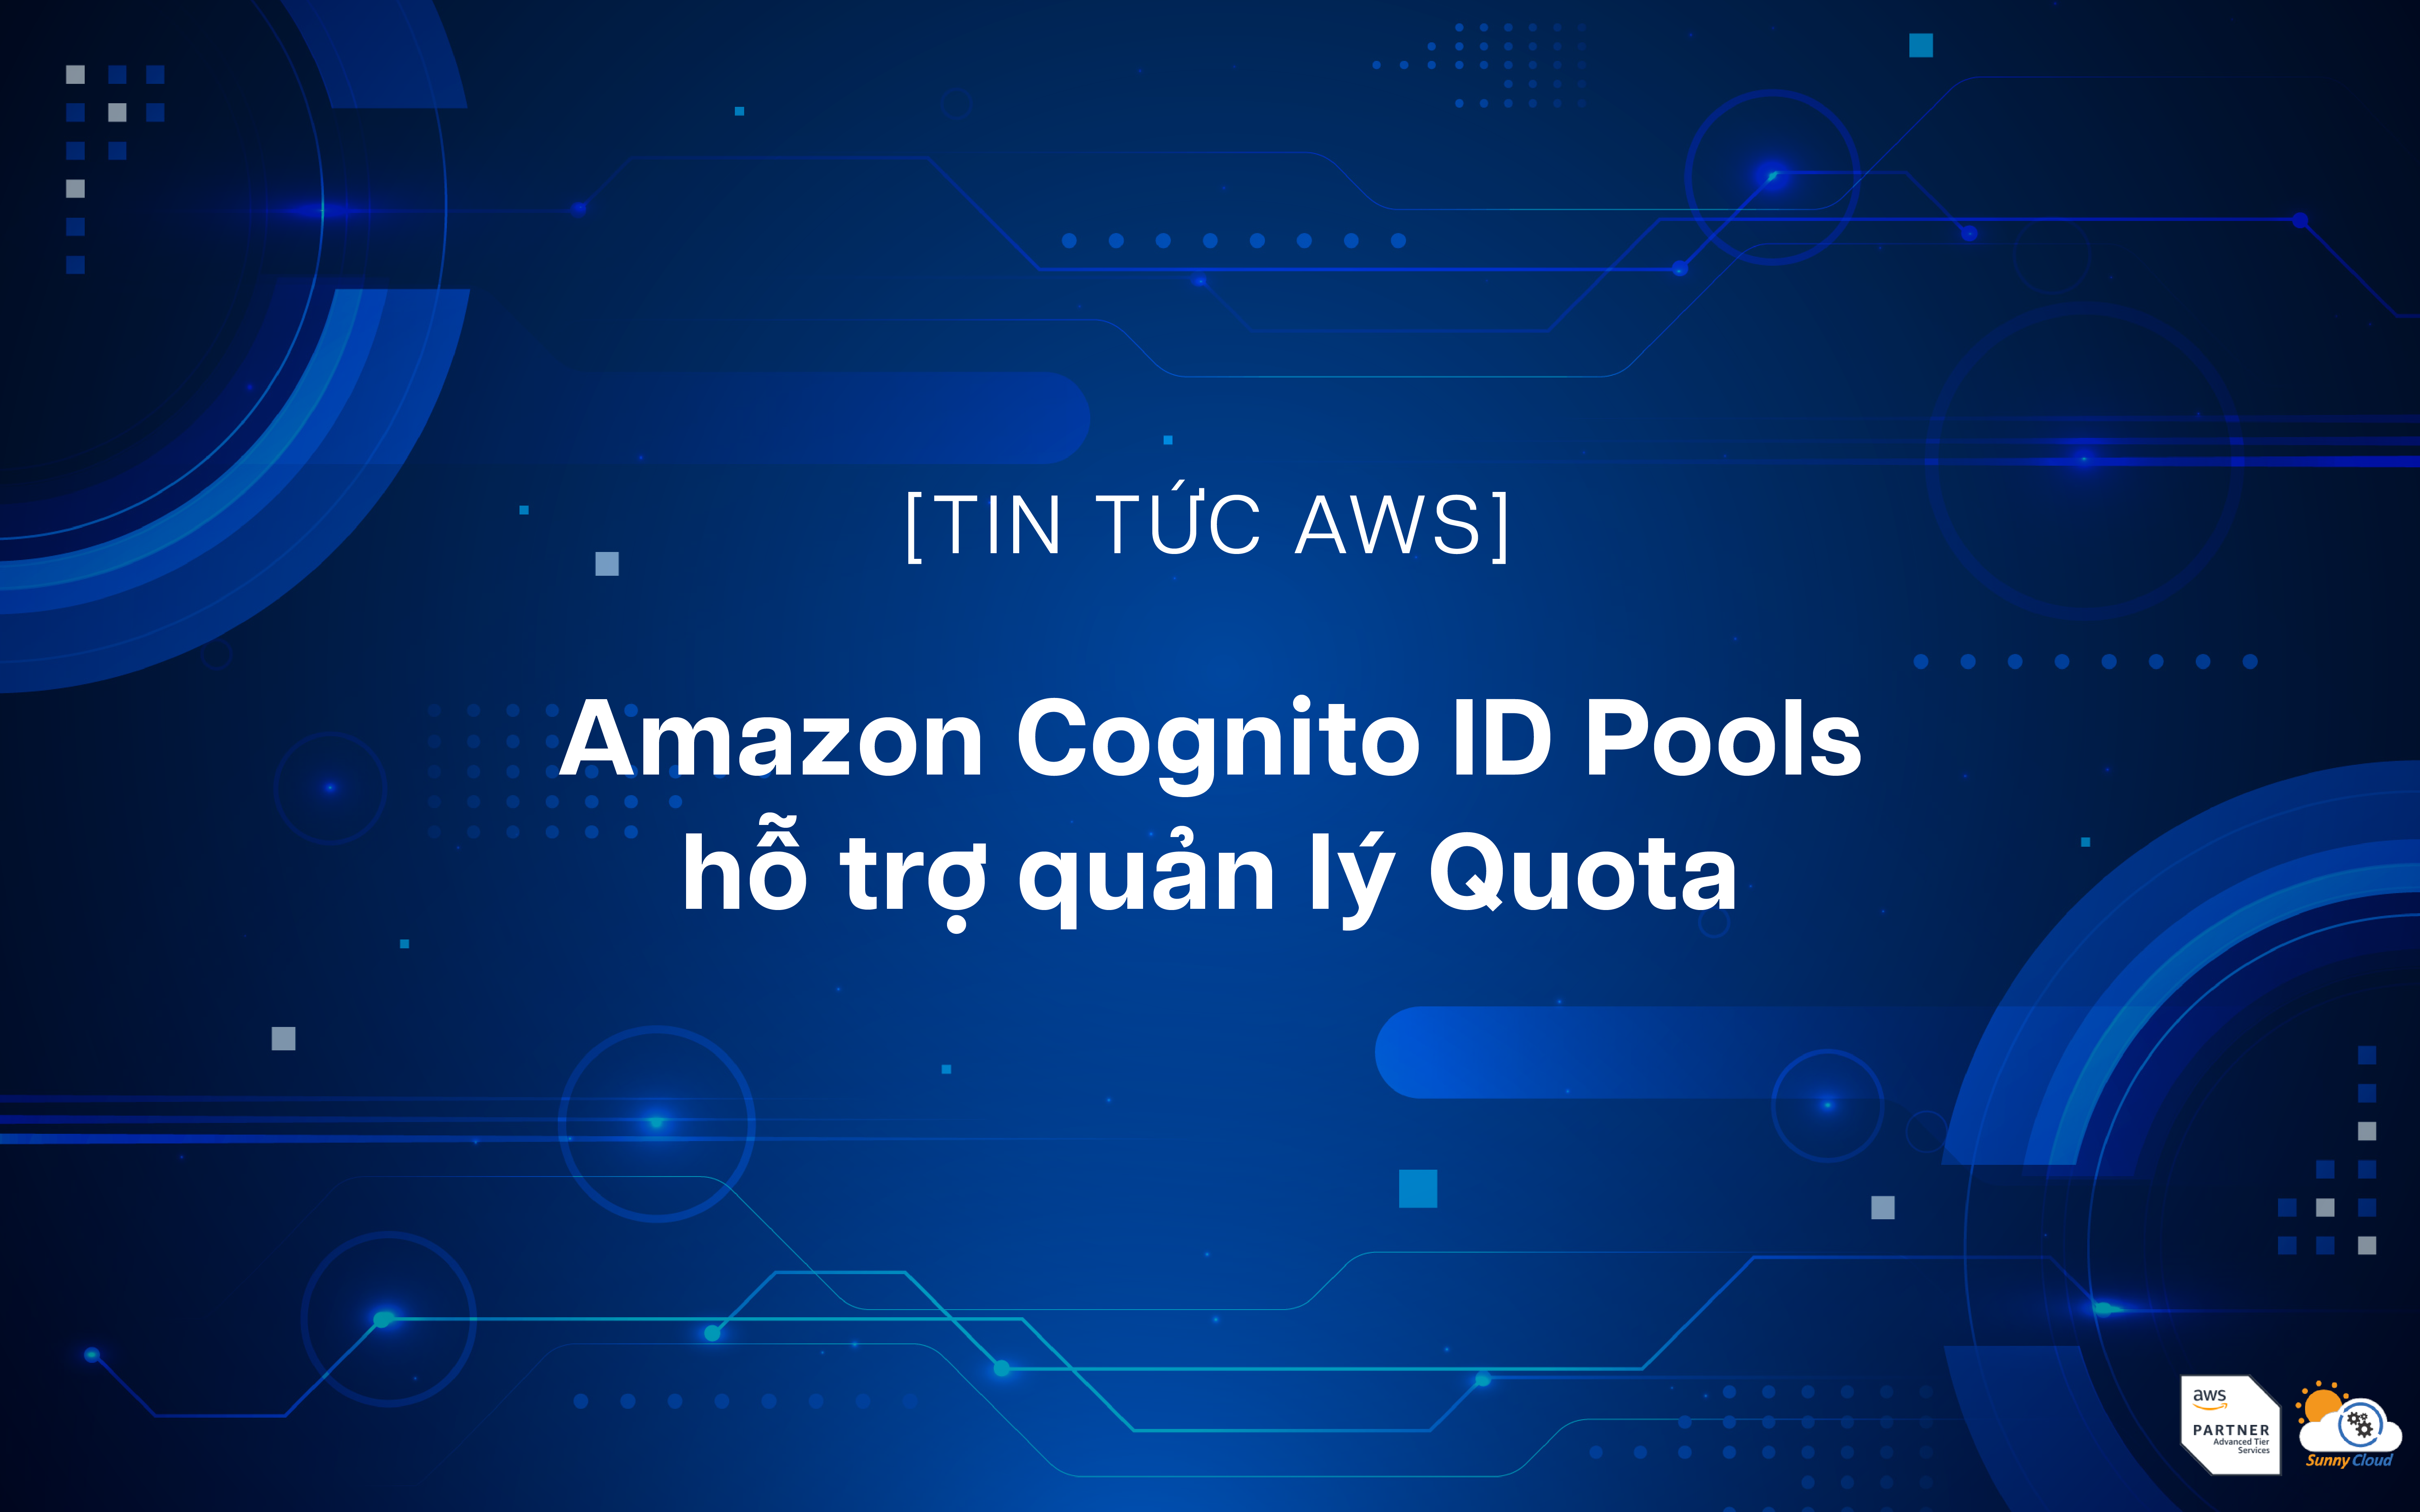 Amazon Cognito ID Pools hỗ trợ quản lý Quota